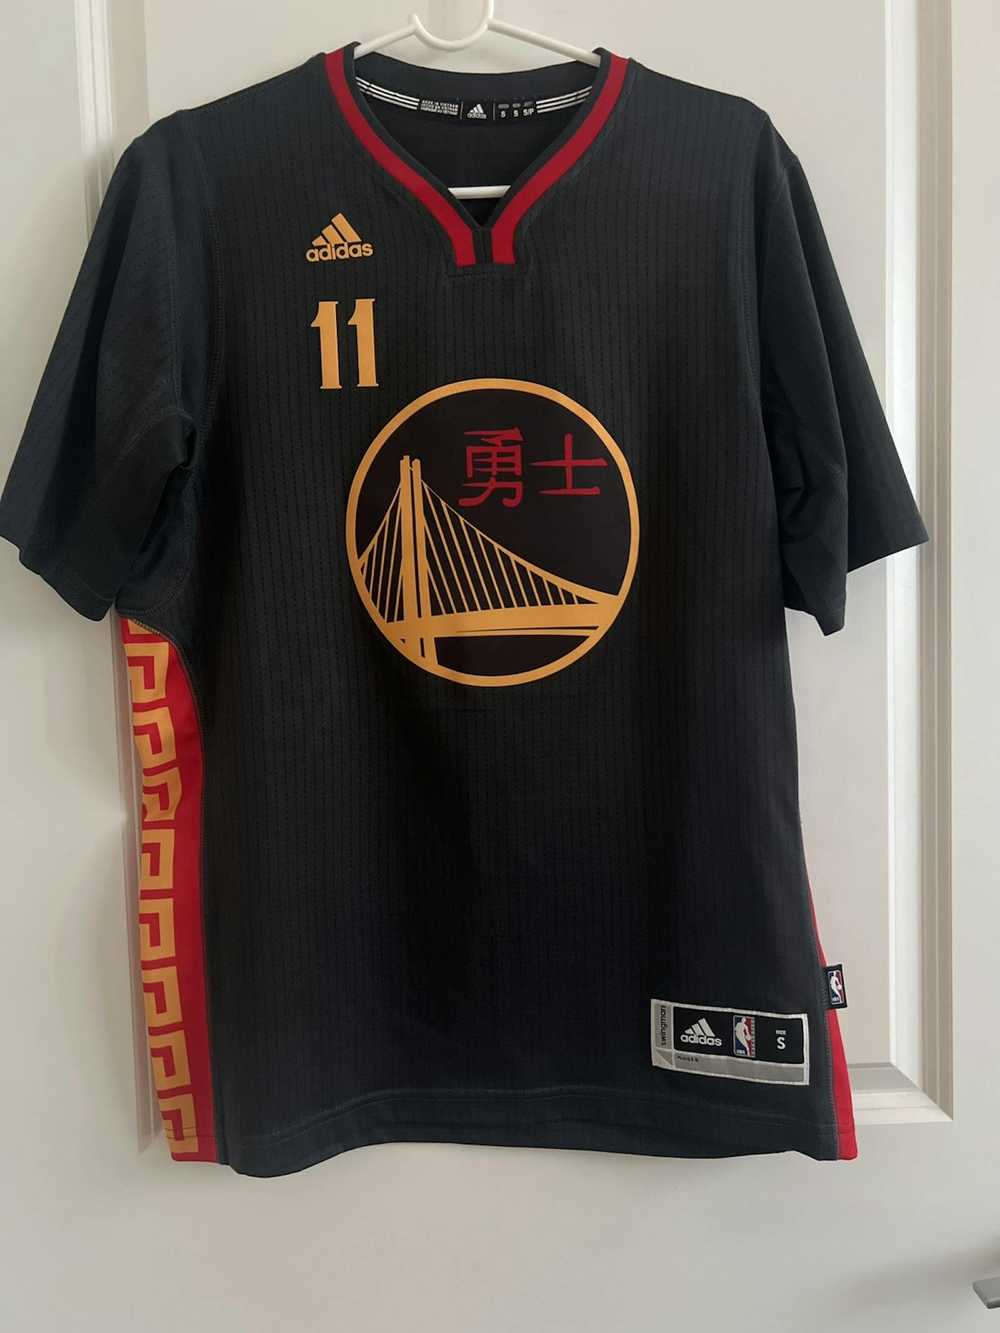 NBA Adidas Swingman Jersey - image 1